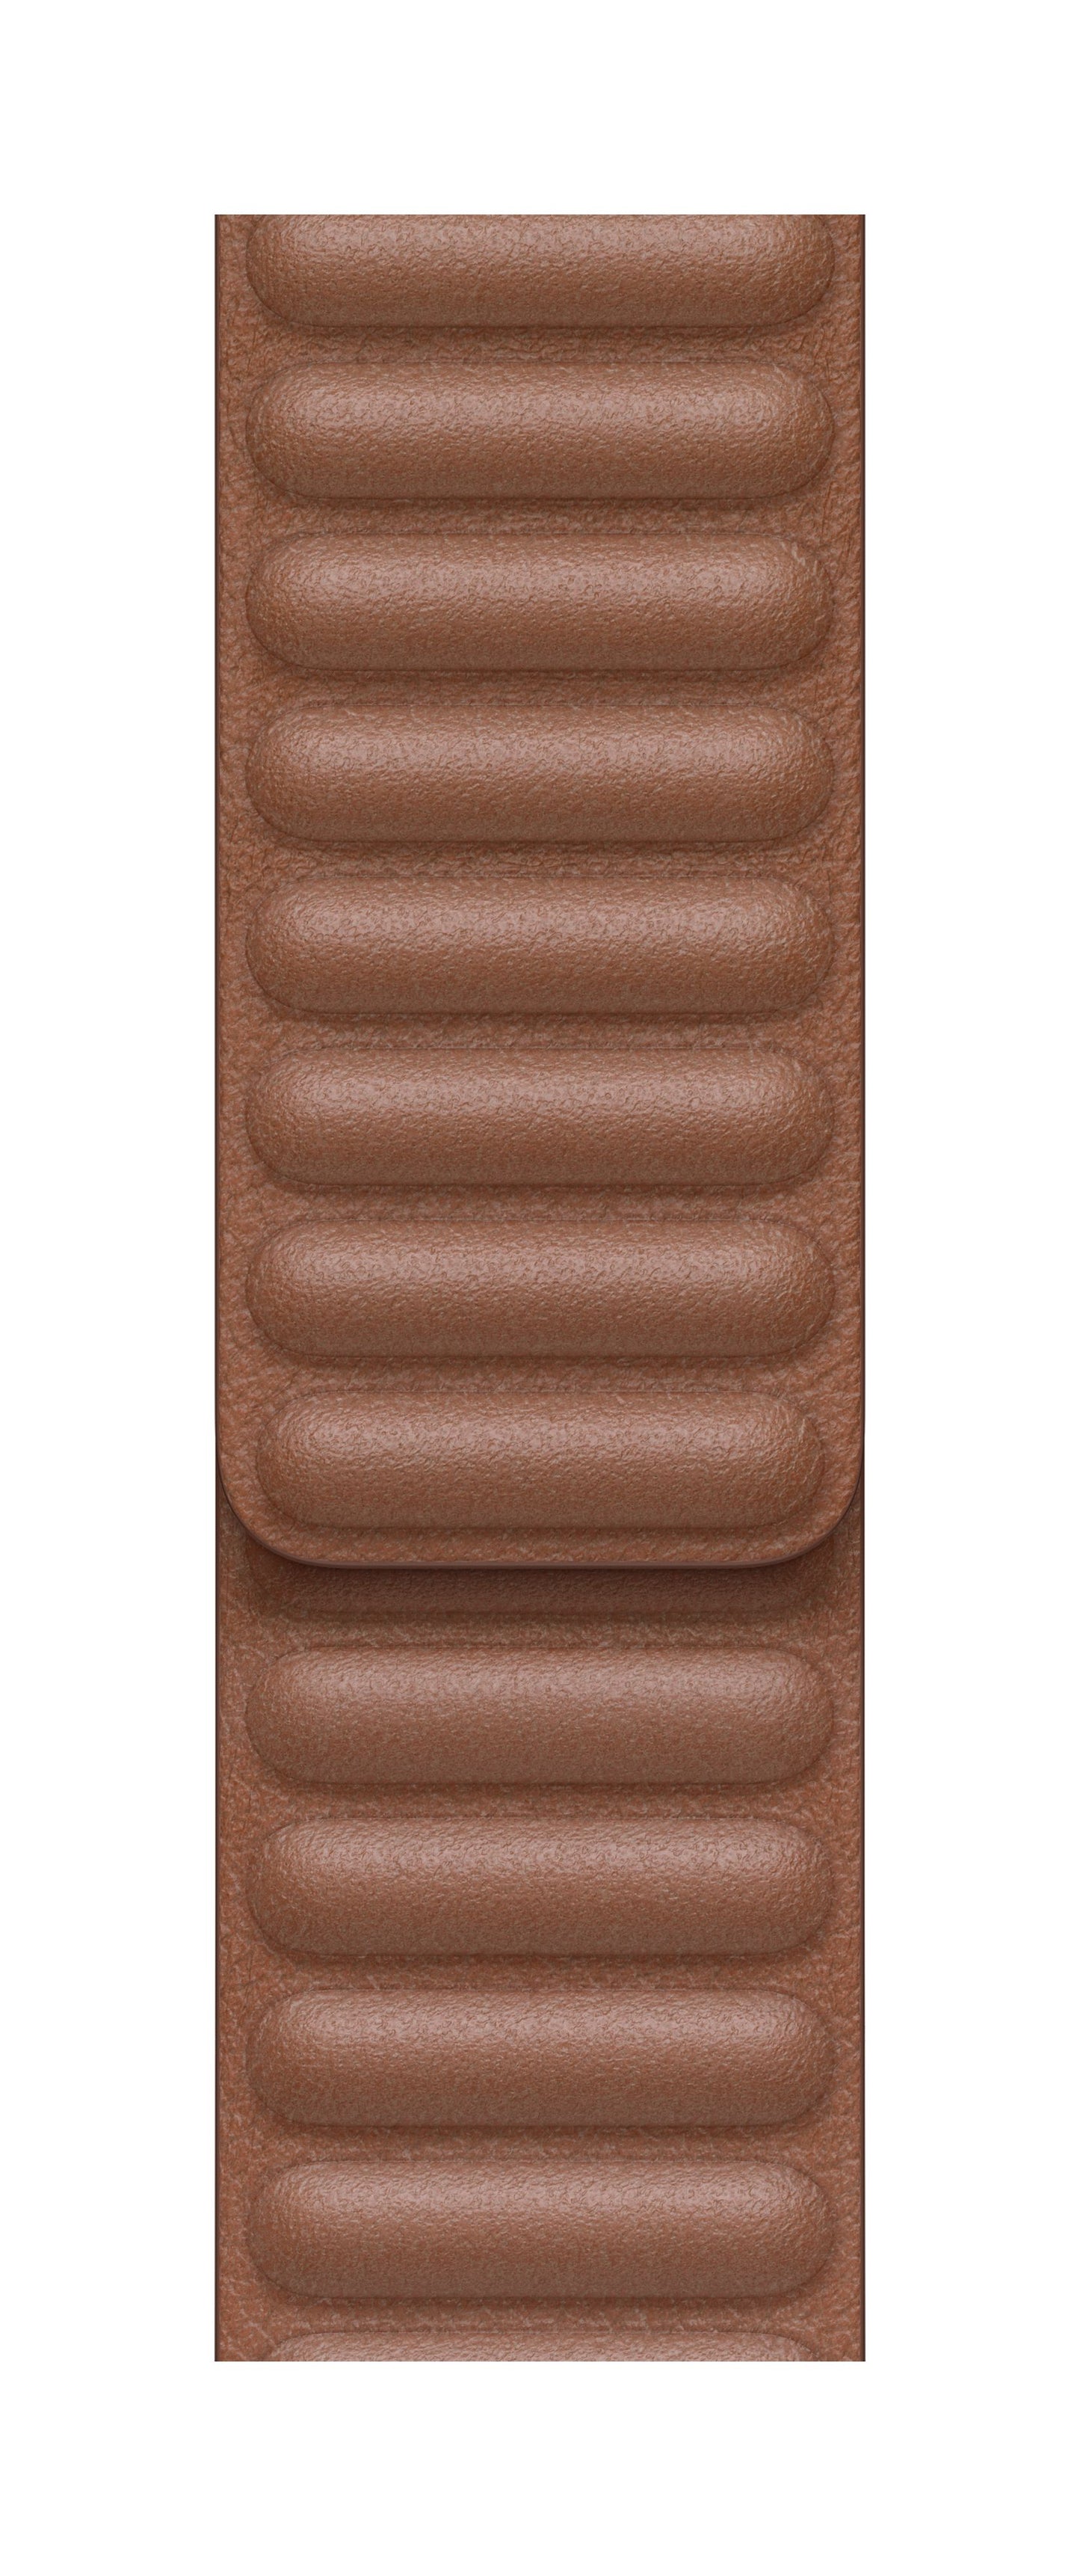 44mm Saddle Brown Leather Link - Large